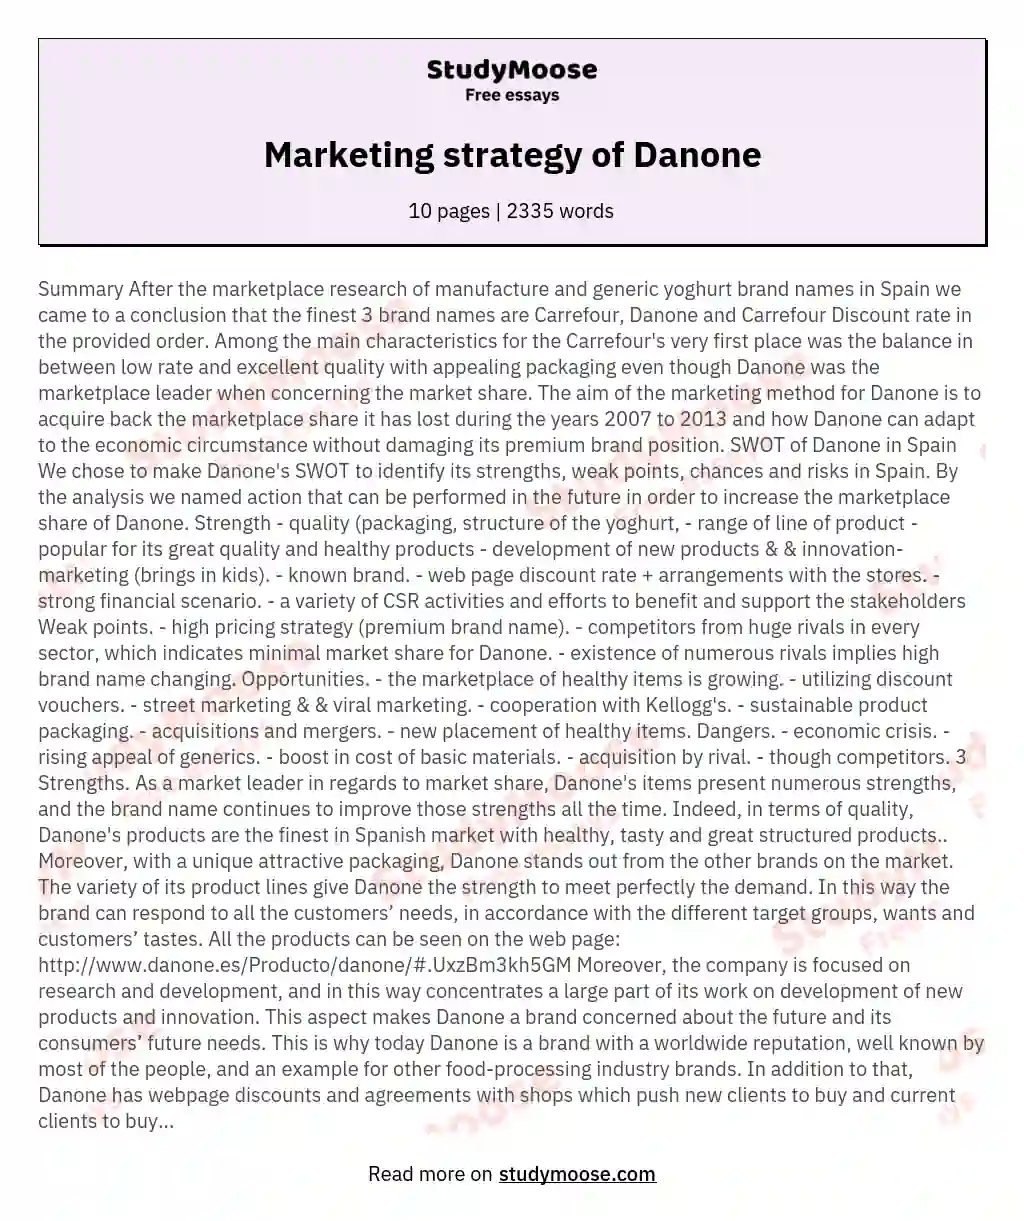 Marketing strategy of Danone essay